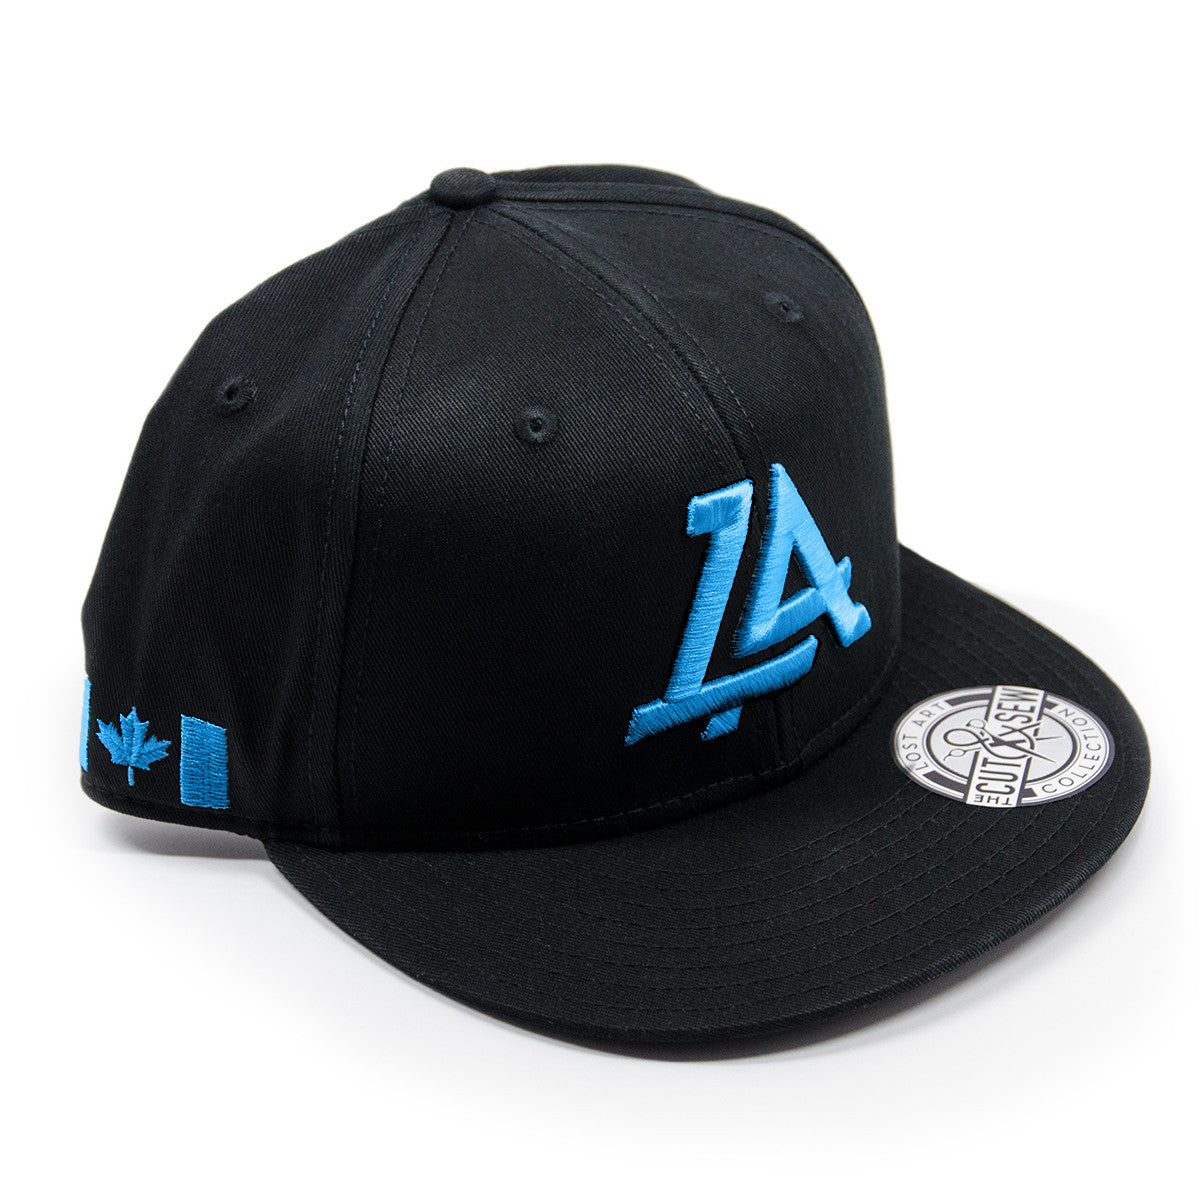 Lost Art Canada - blue logo black snapback hat front view